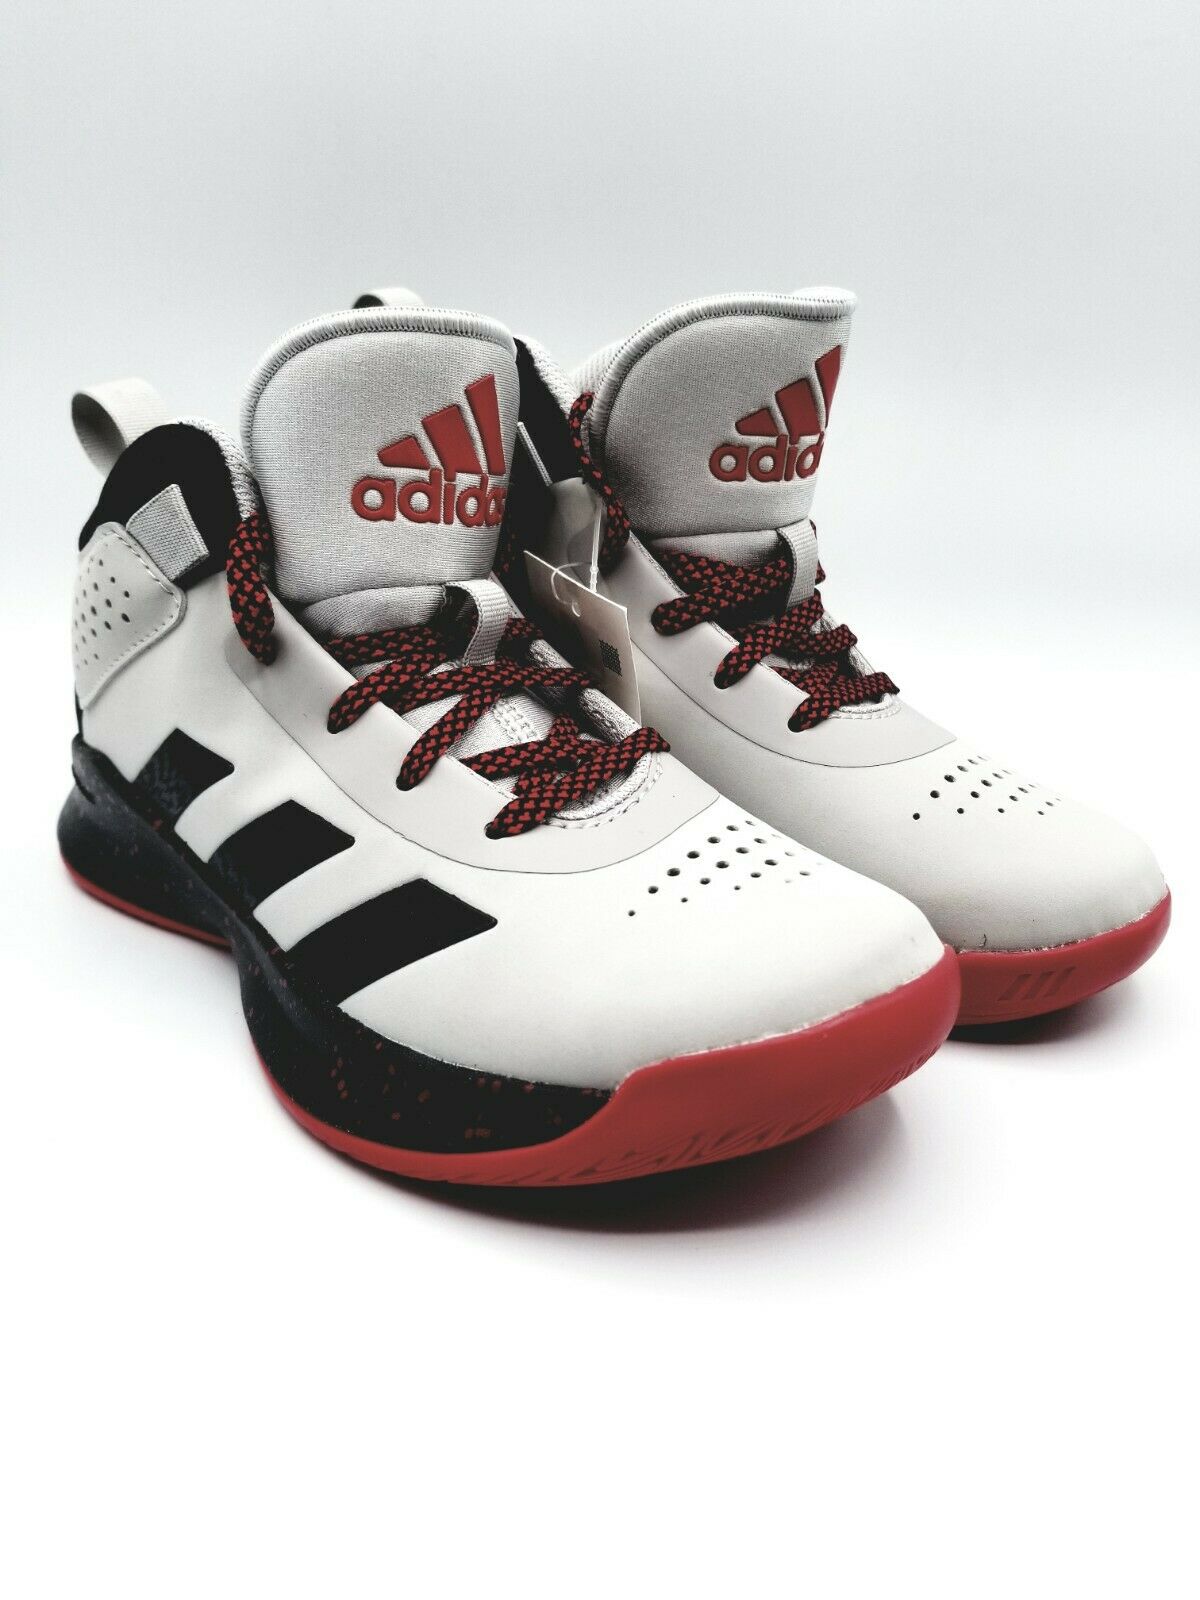 adidas Little Kids Cross Em Up 5 Basketball Shoes Wide Grey/Black/Scarlet FW8980